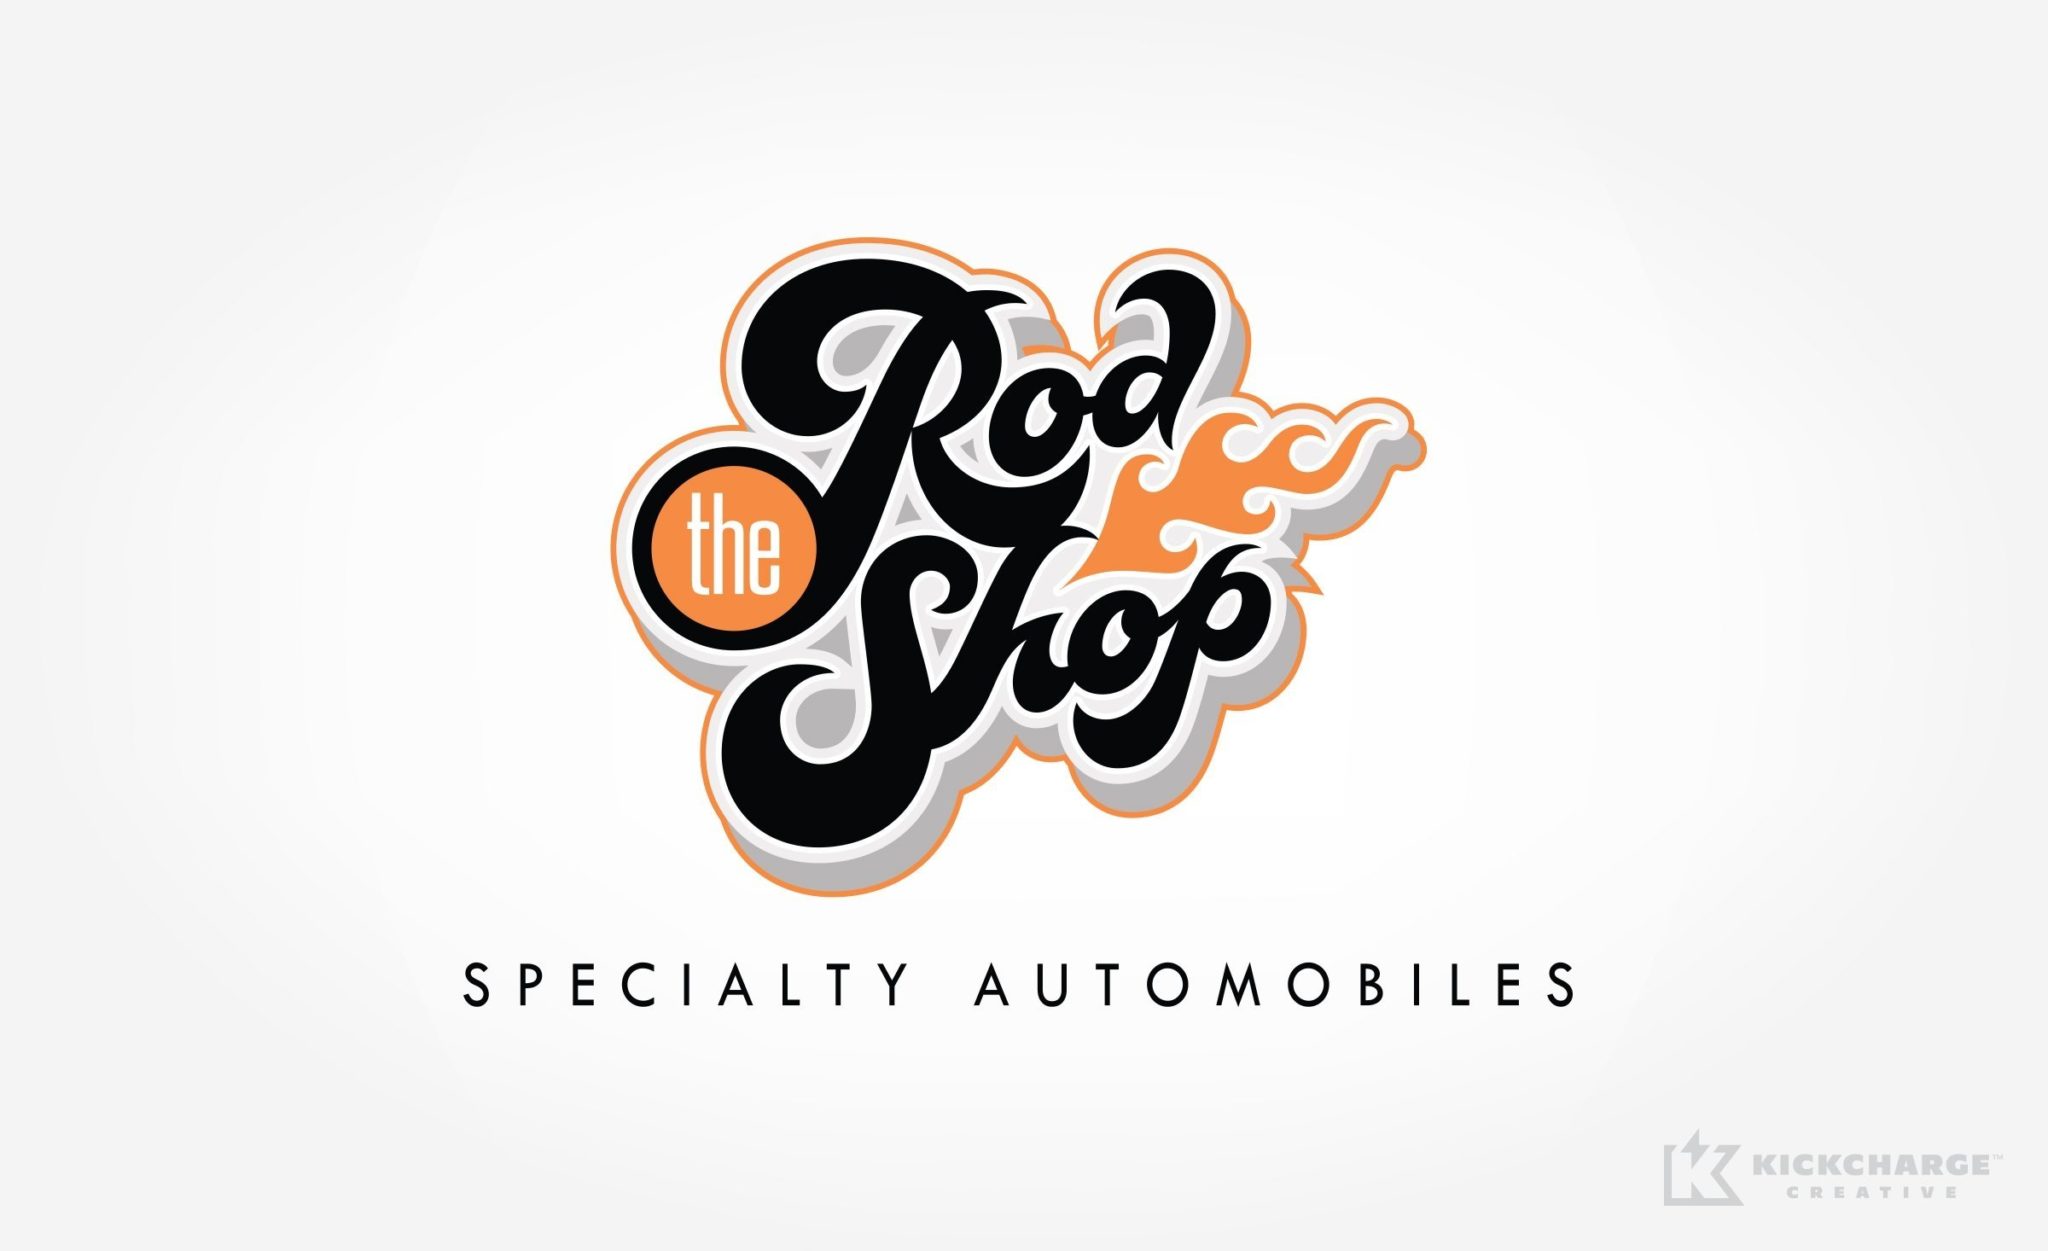 The Rod Shop Specialty Automobiles